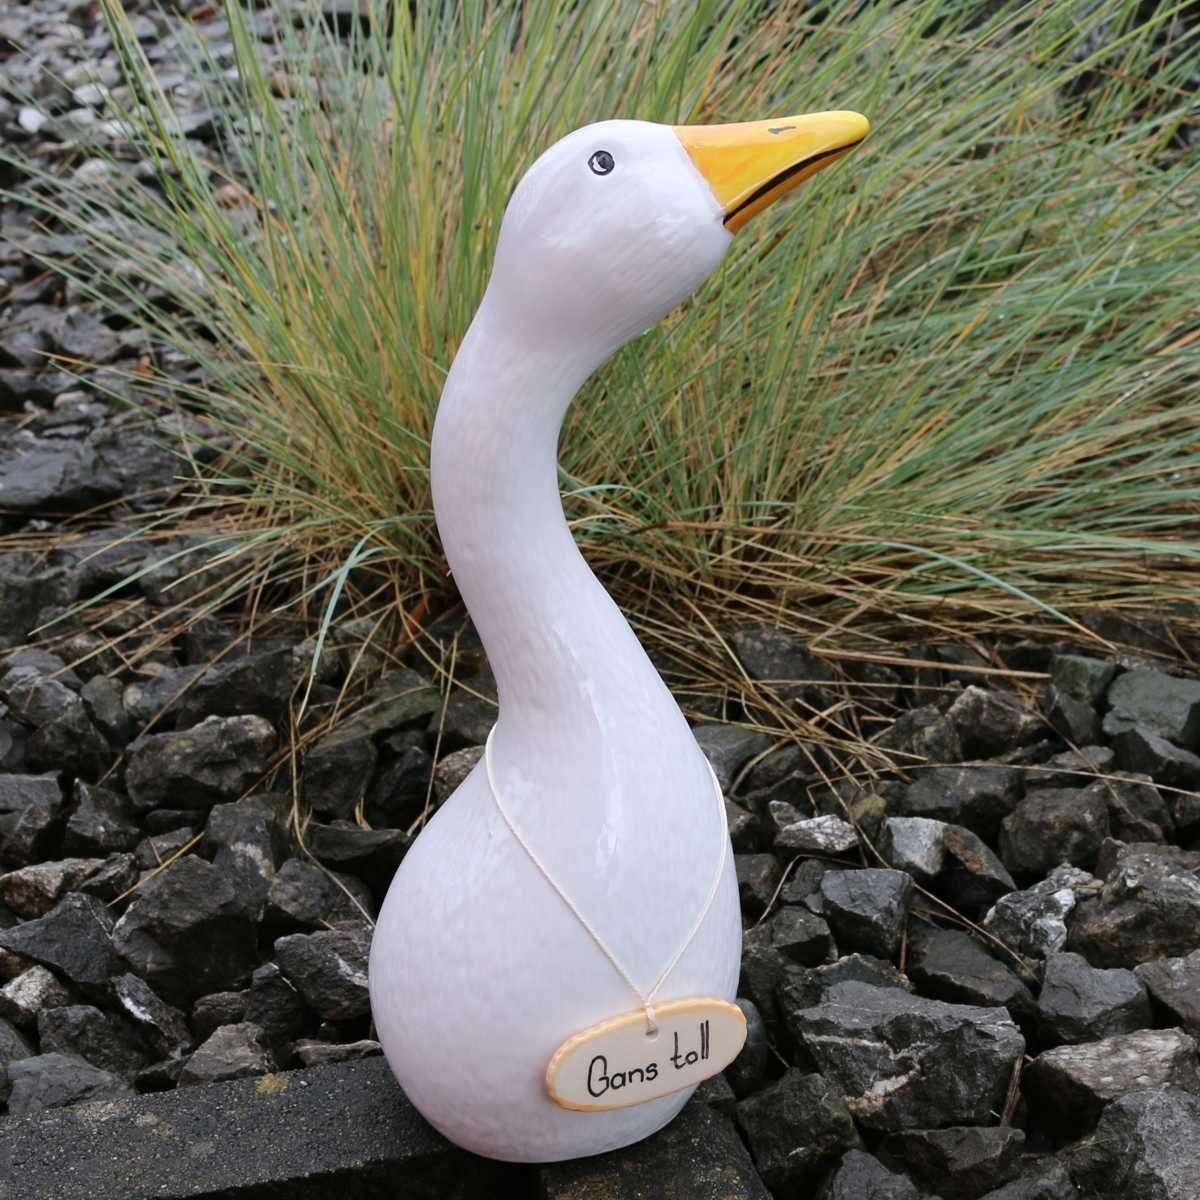 Schild Tangoo (Stück) Tangoo-Deko Keramik-Vogel GANS Gans mit Gartenfigur TOLL,